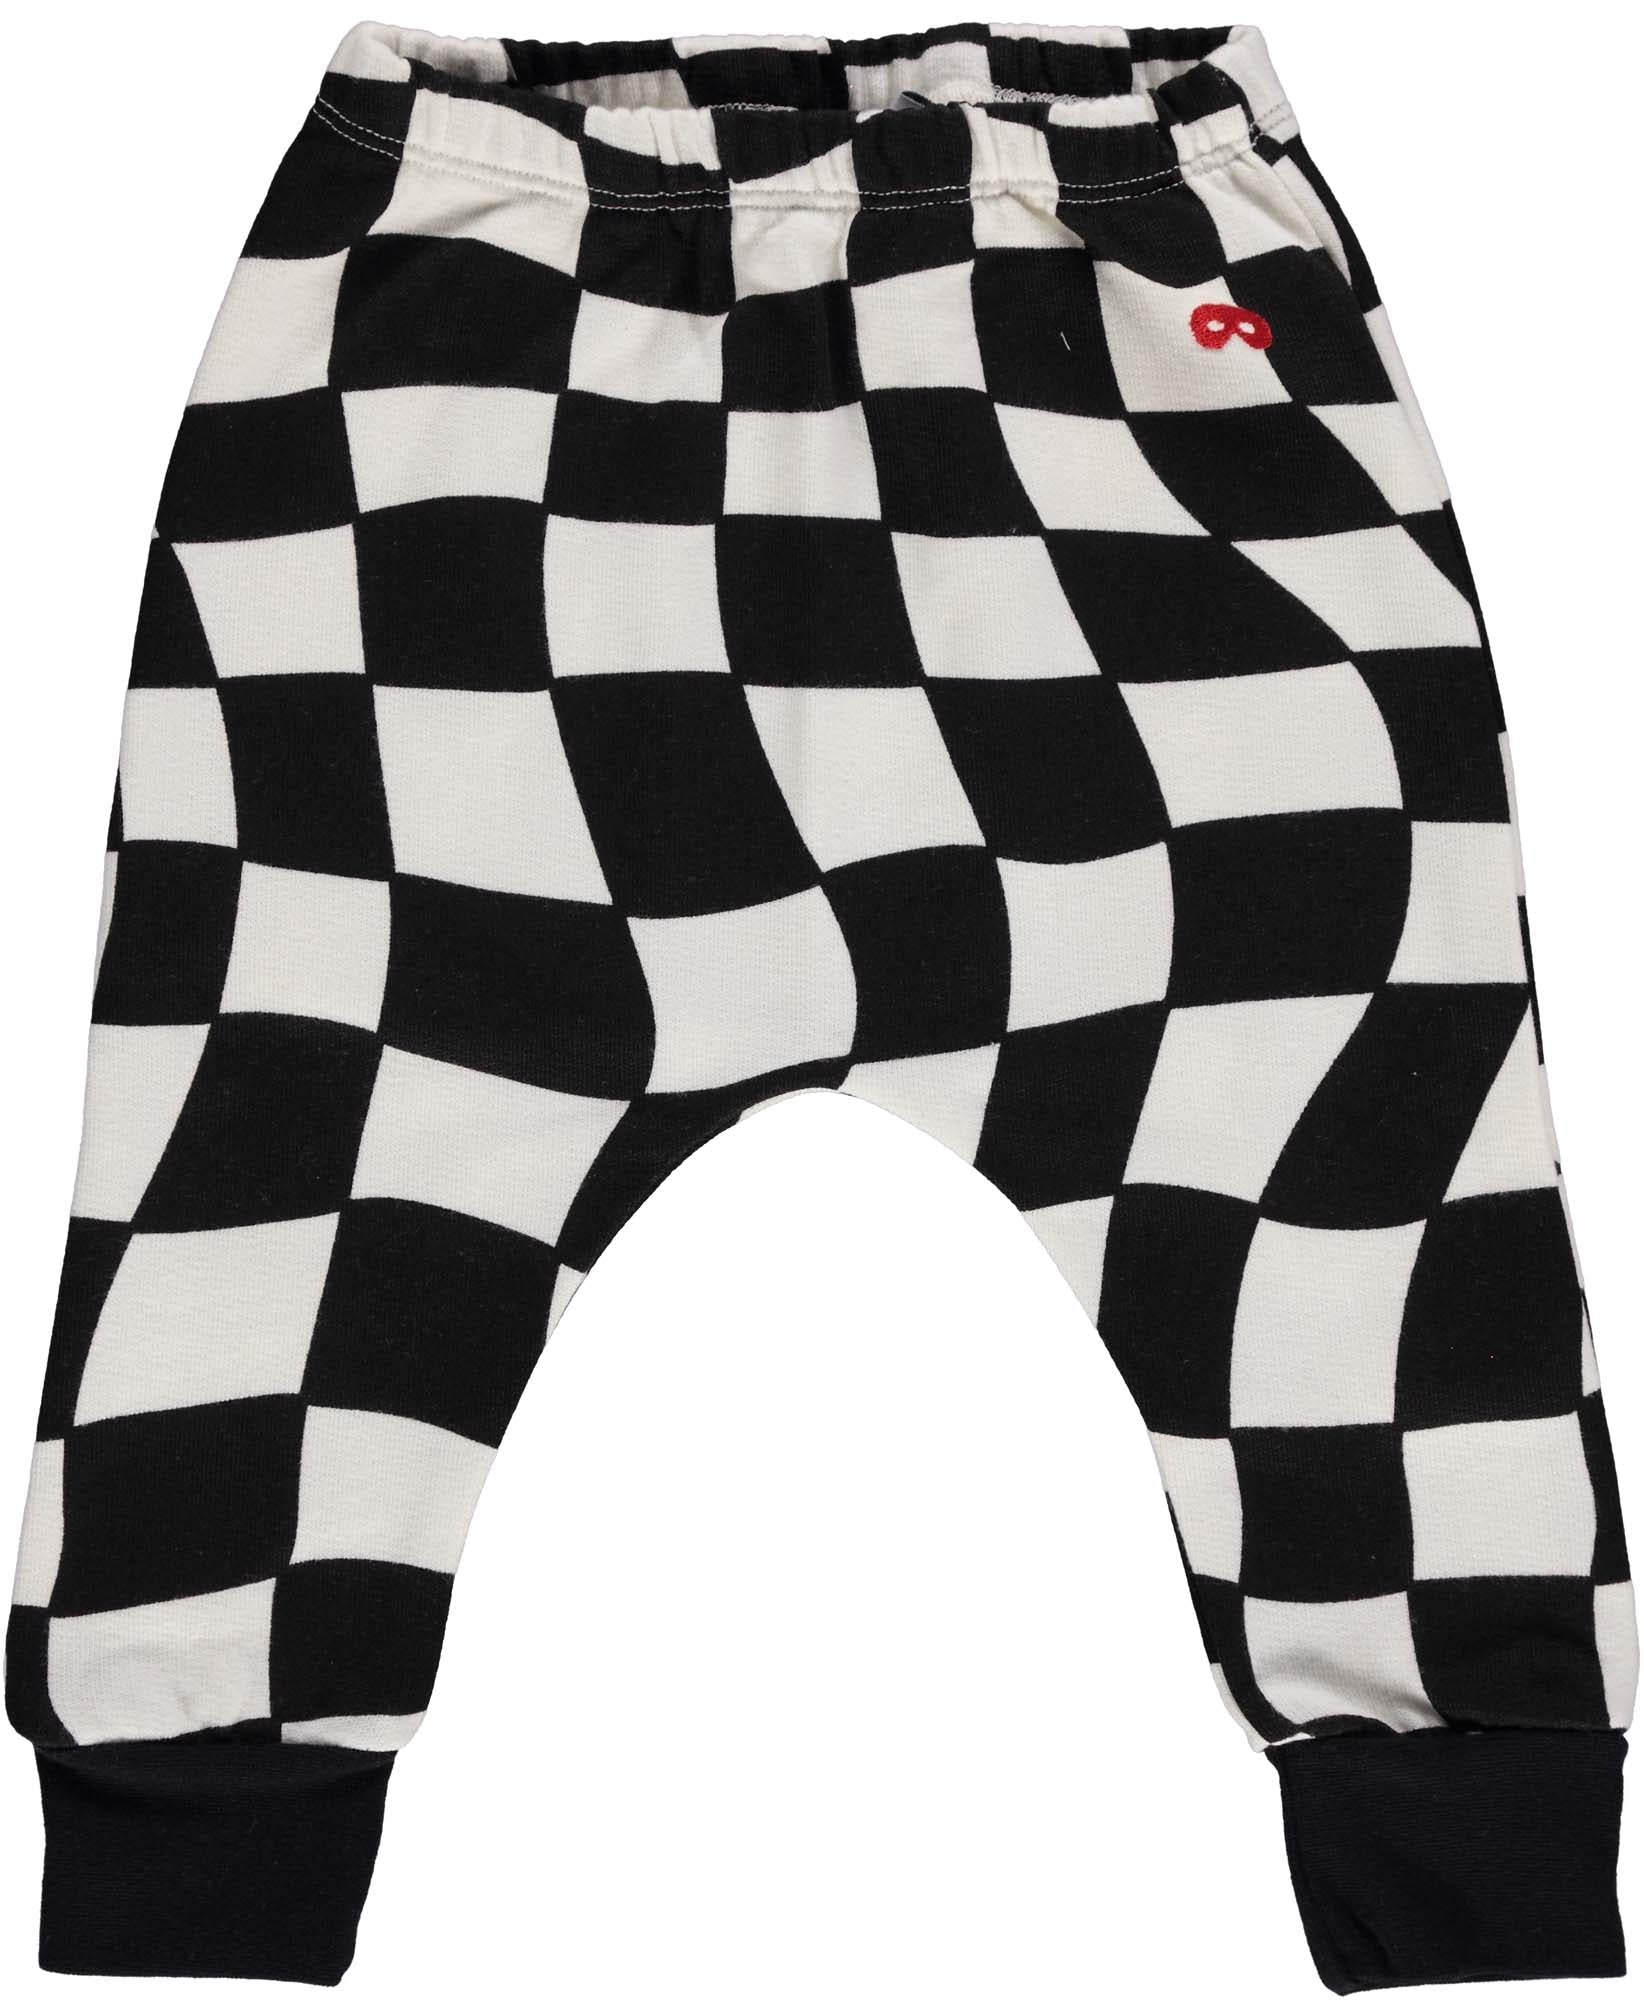 Black Check Baby Pants BL009